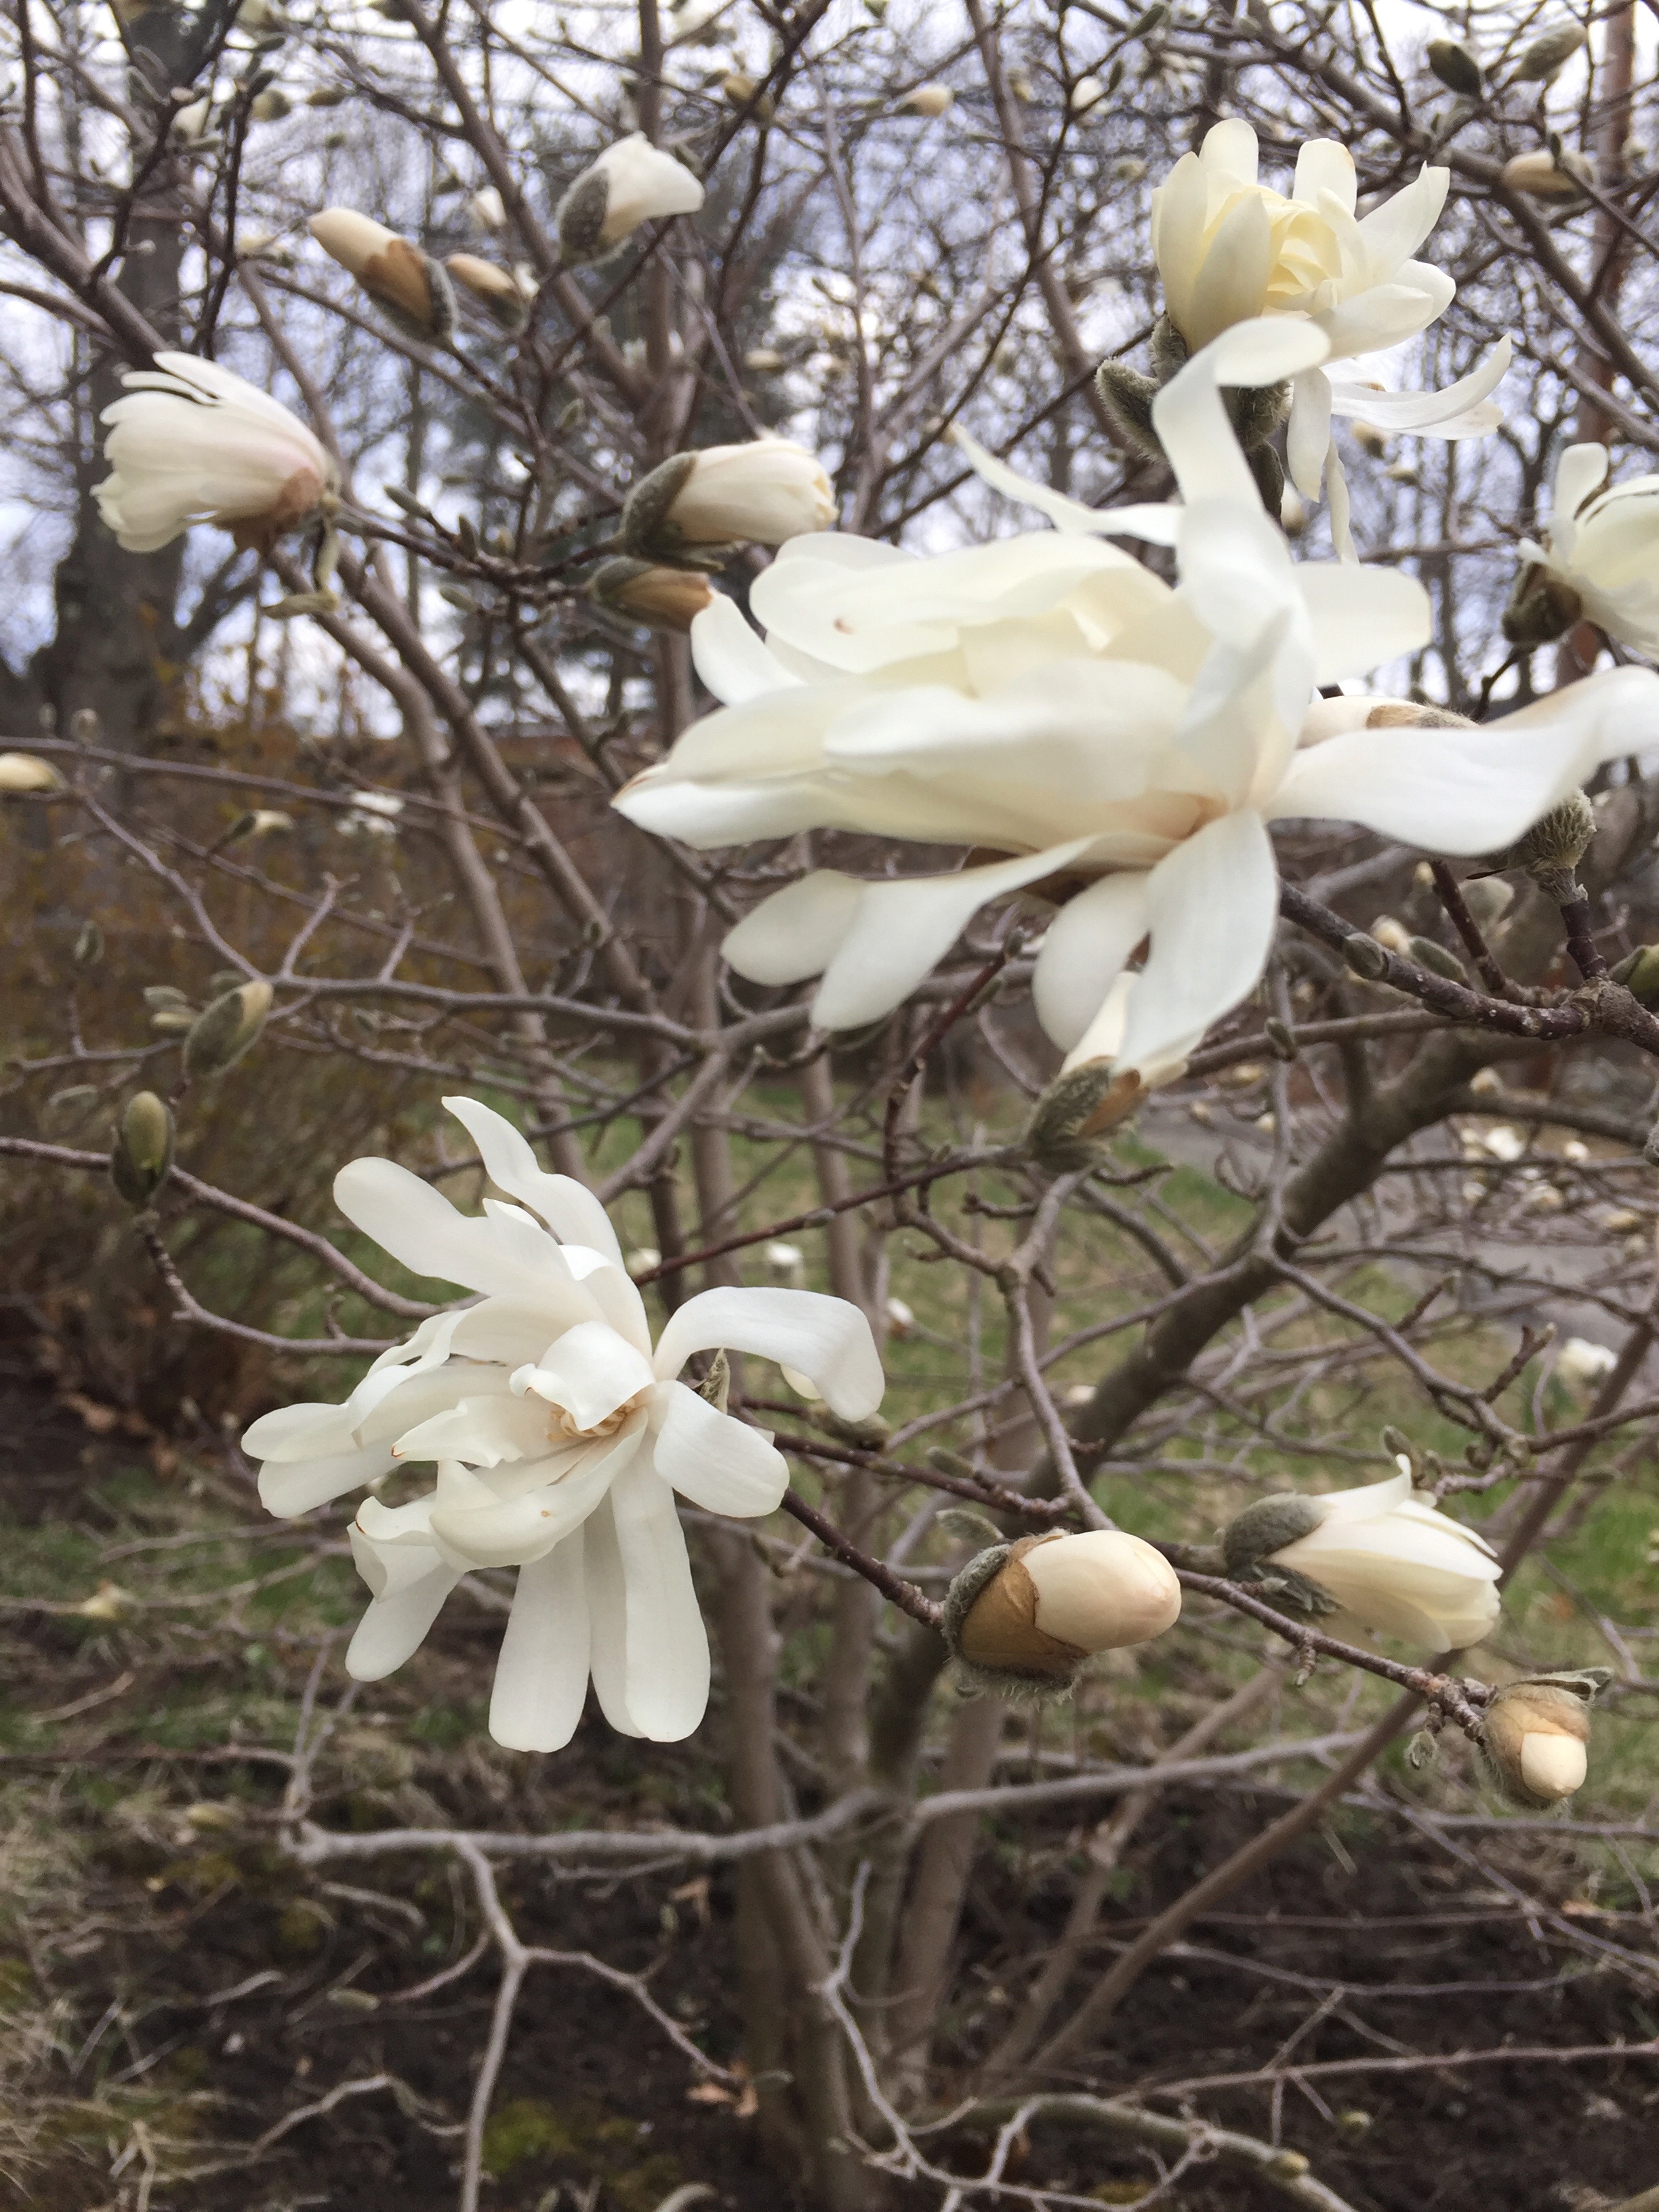 It's the Weekend! Number 100, Star Magnolia Tree in Bloom